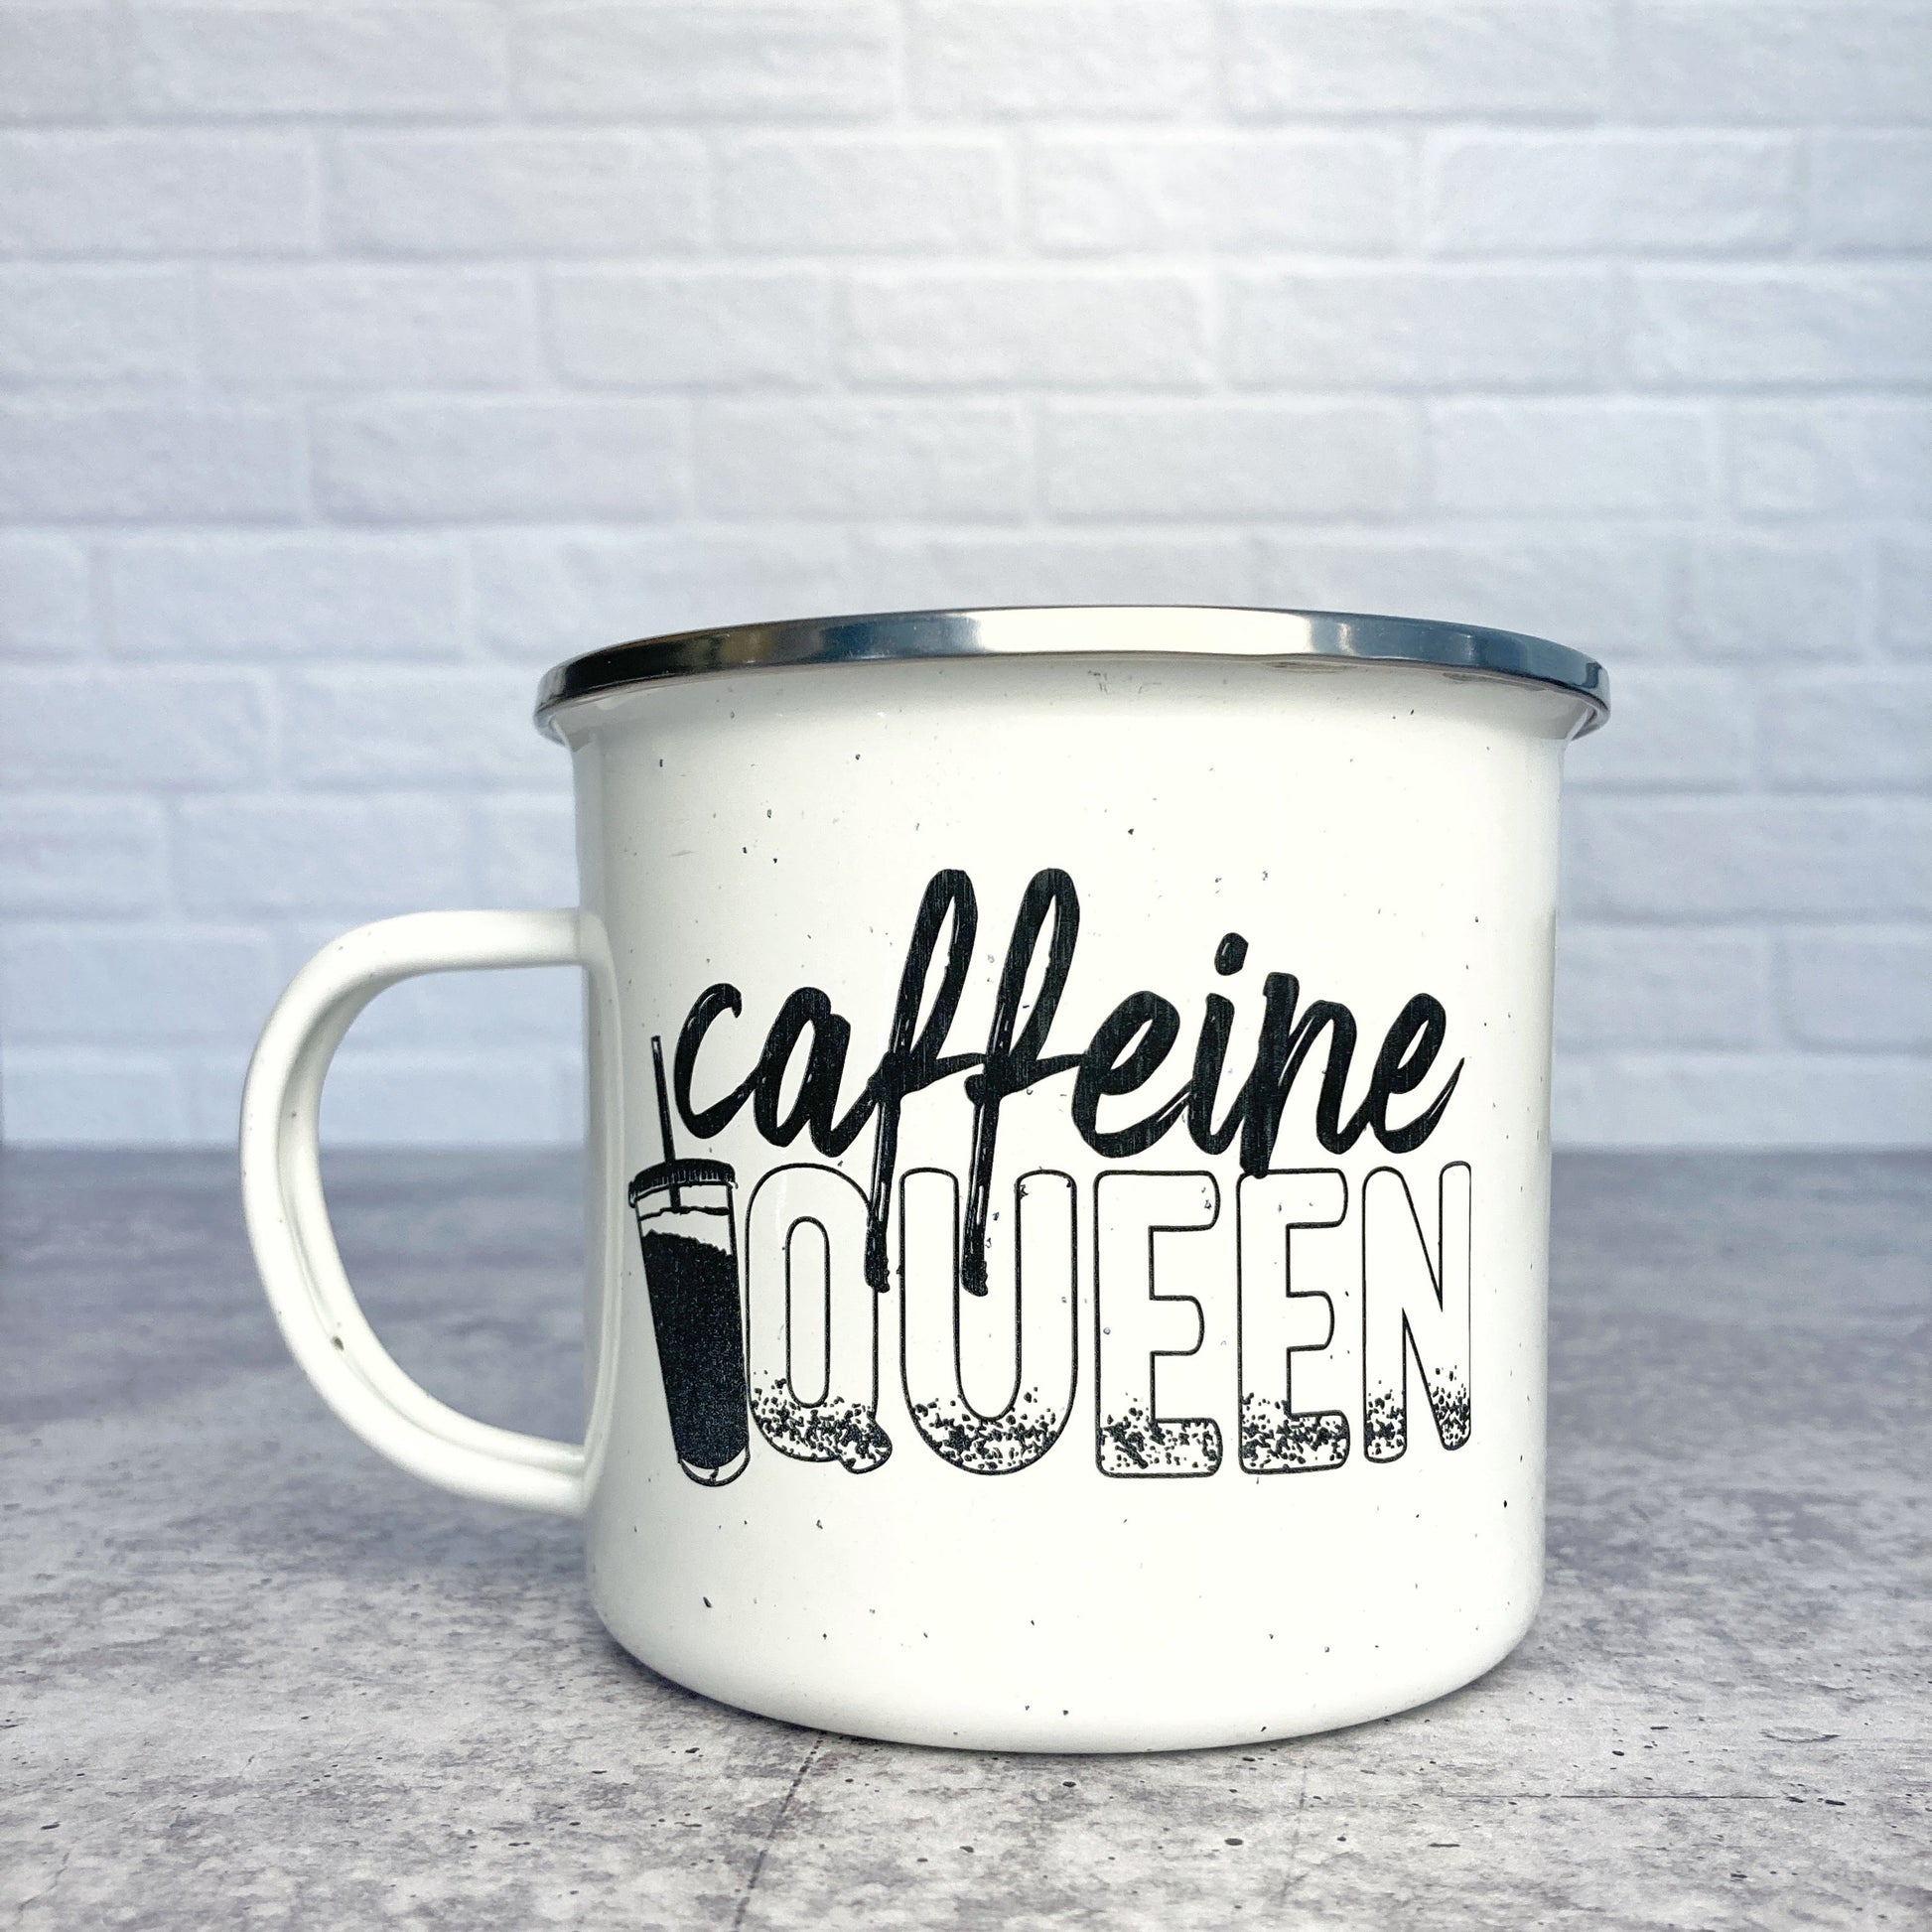 Caffeine Queen design on a white enamel mug